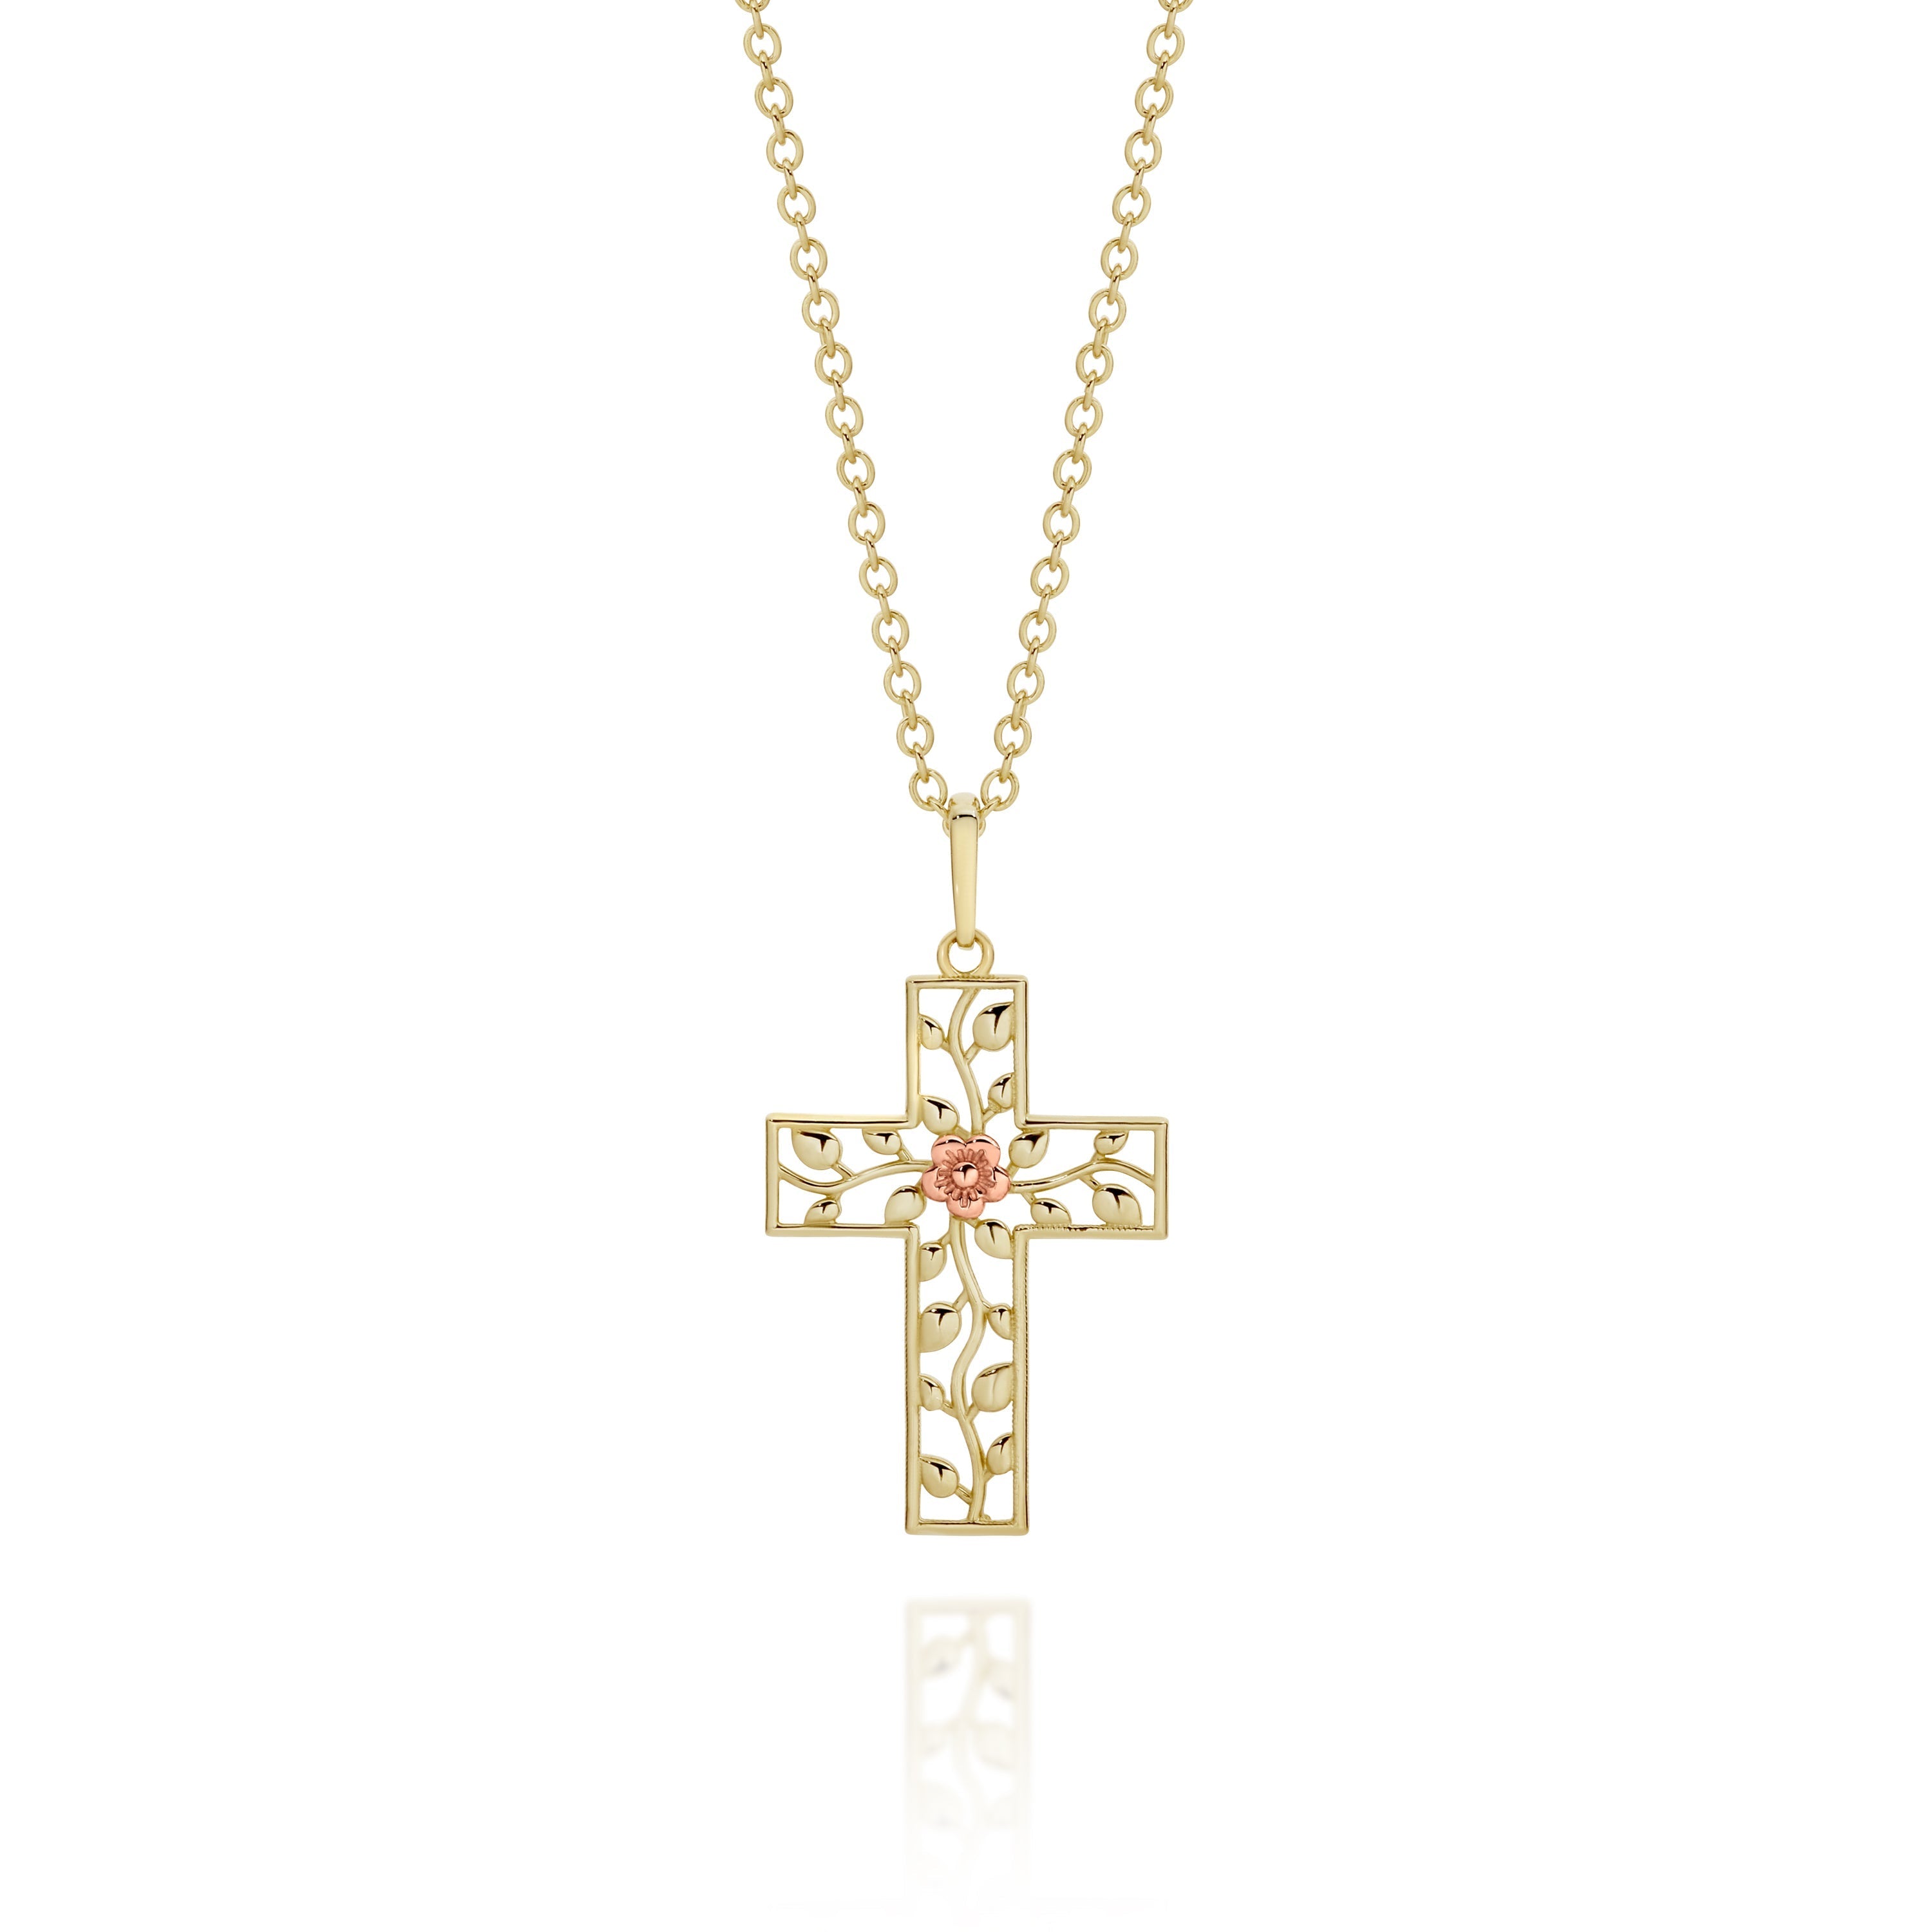 9ct gold floral cross pendant